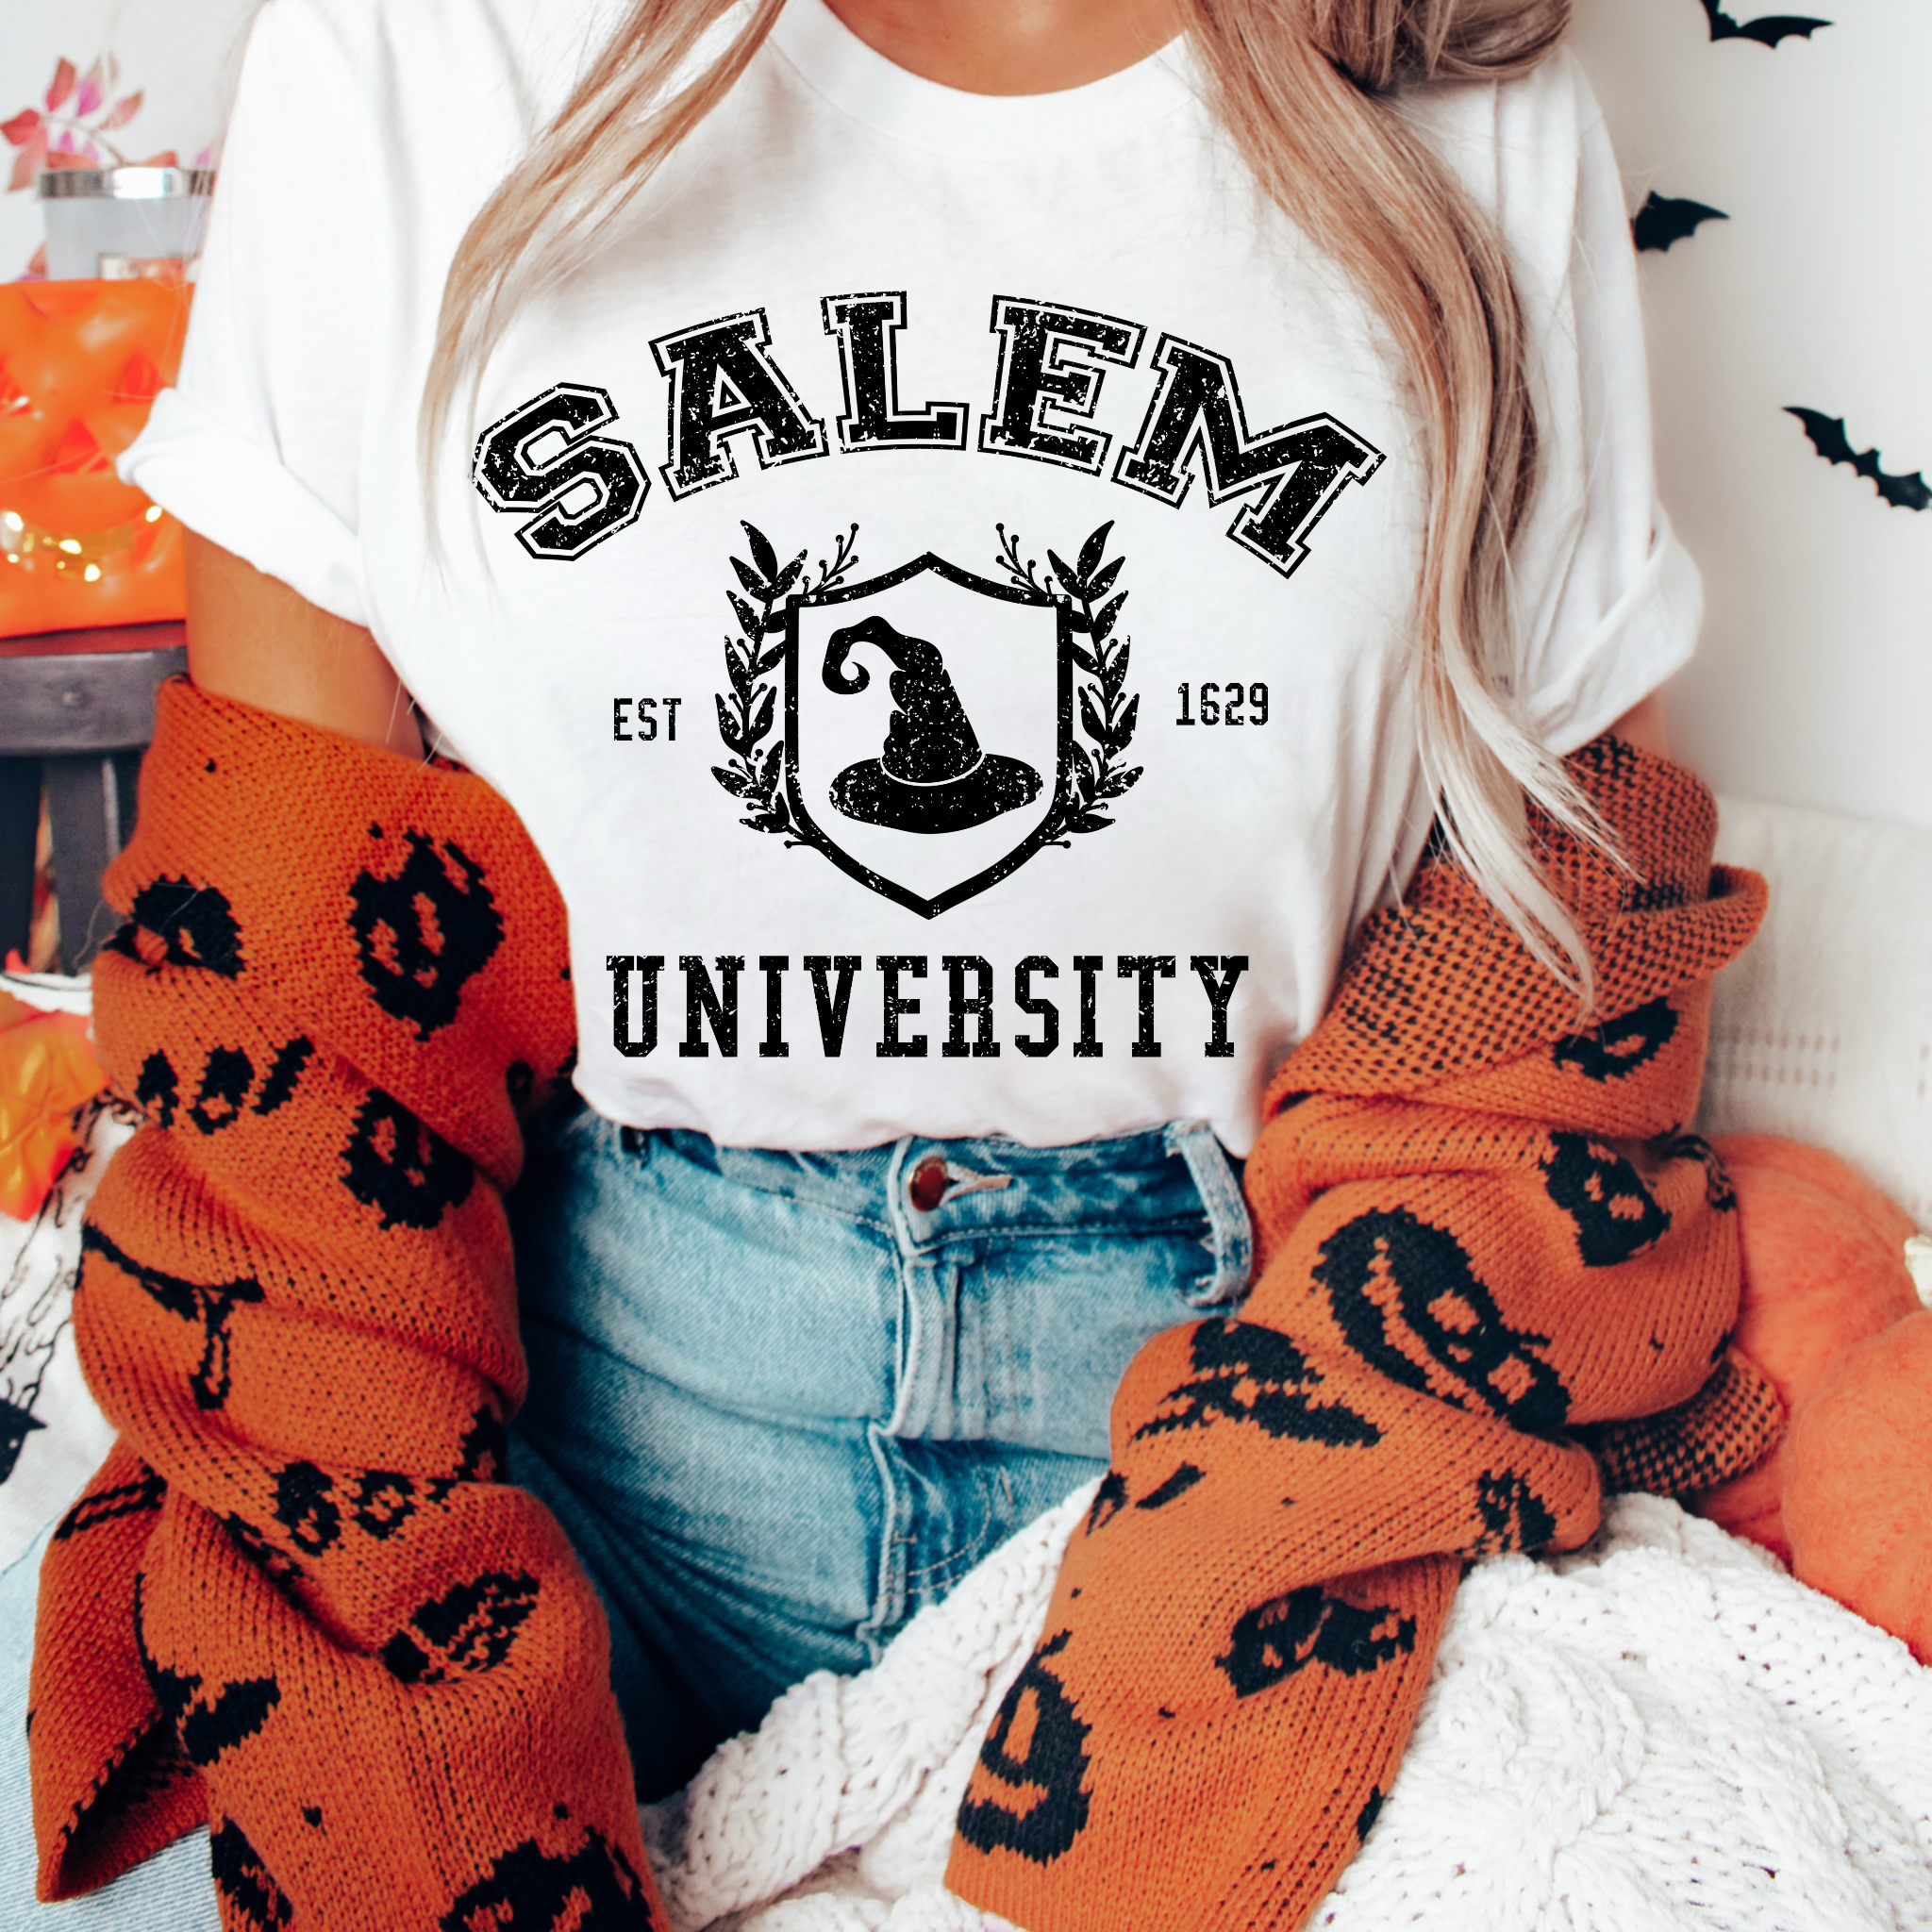 Salem University Est 1629 Sublimation Transfer